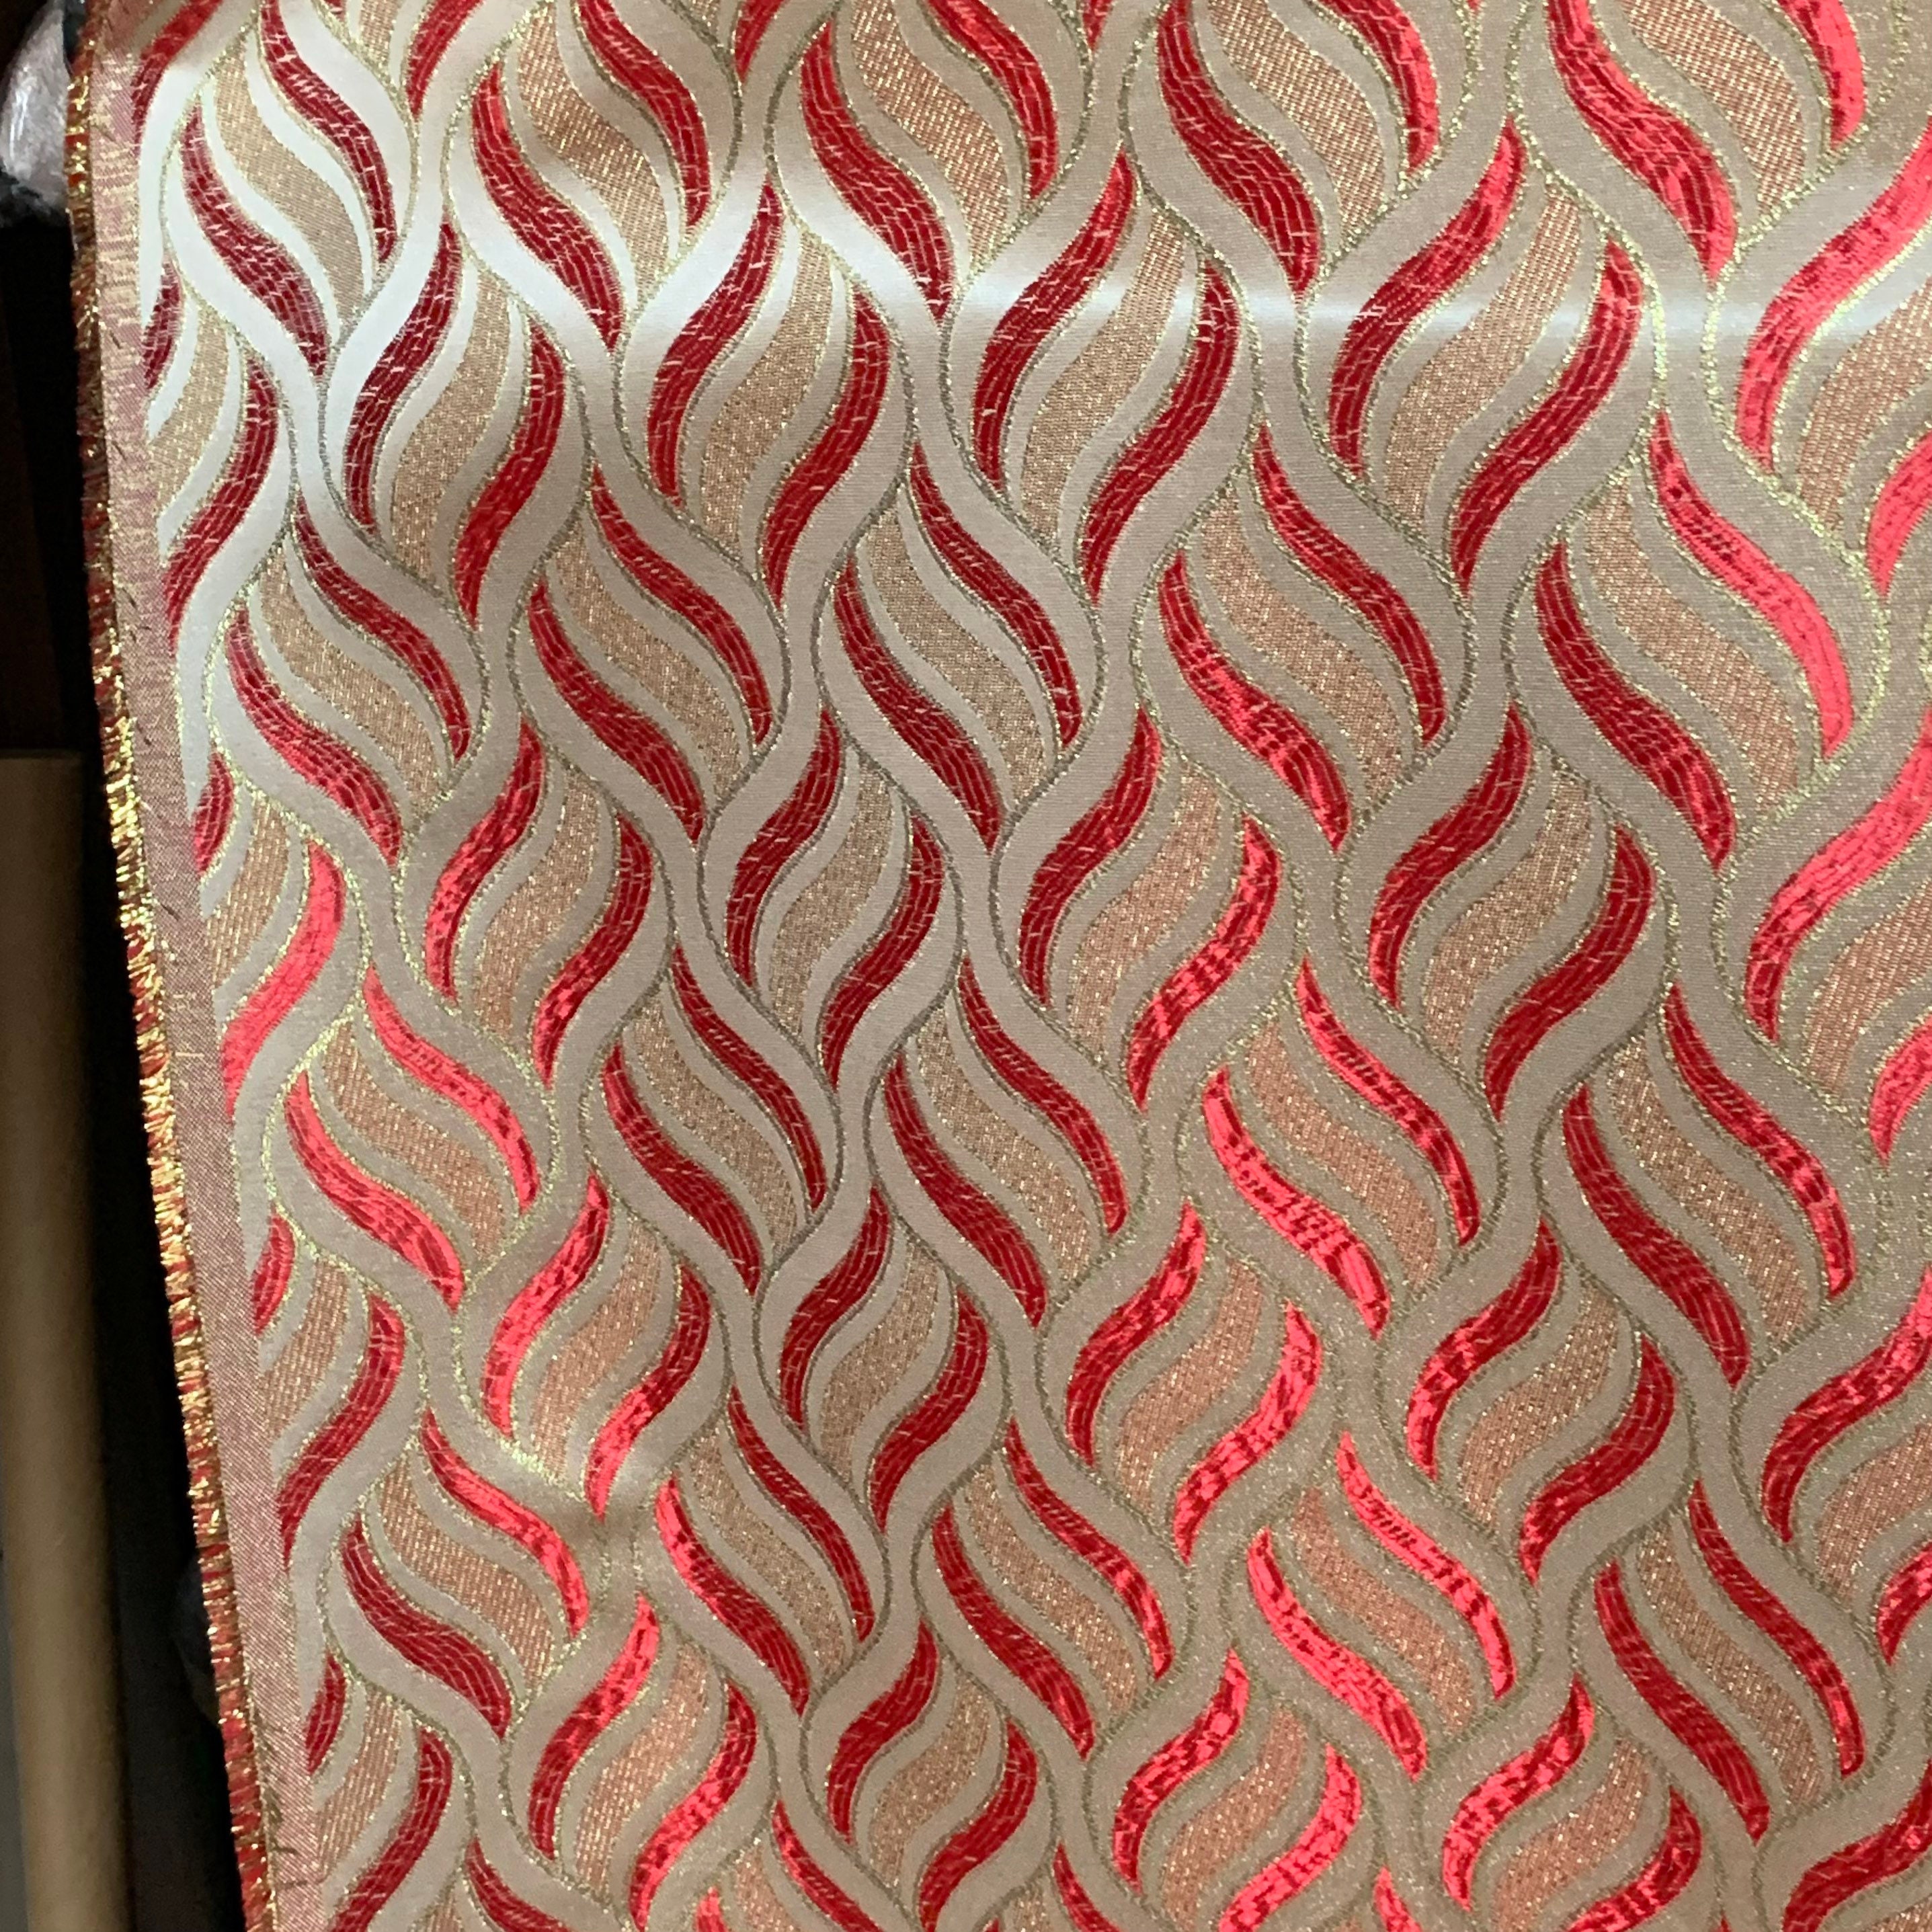 Red Gold metallic swirl print brocade fabric 43 inch wide | Etsy